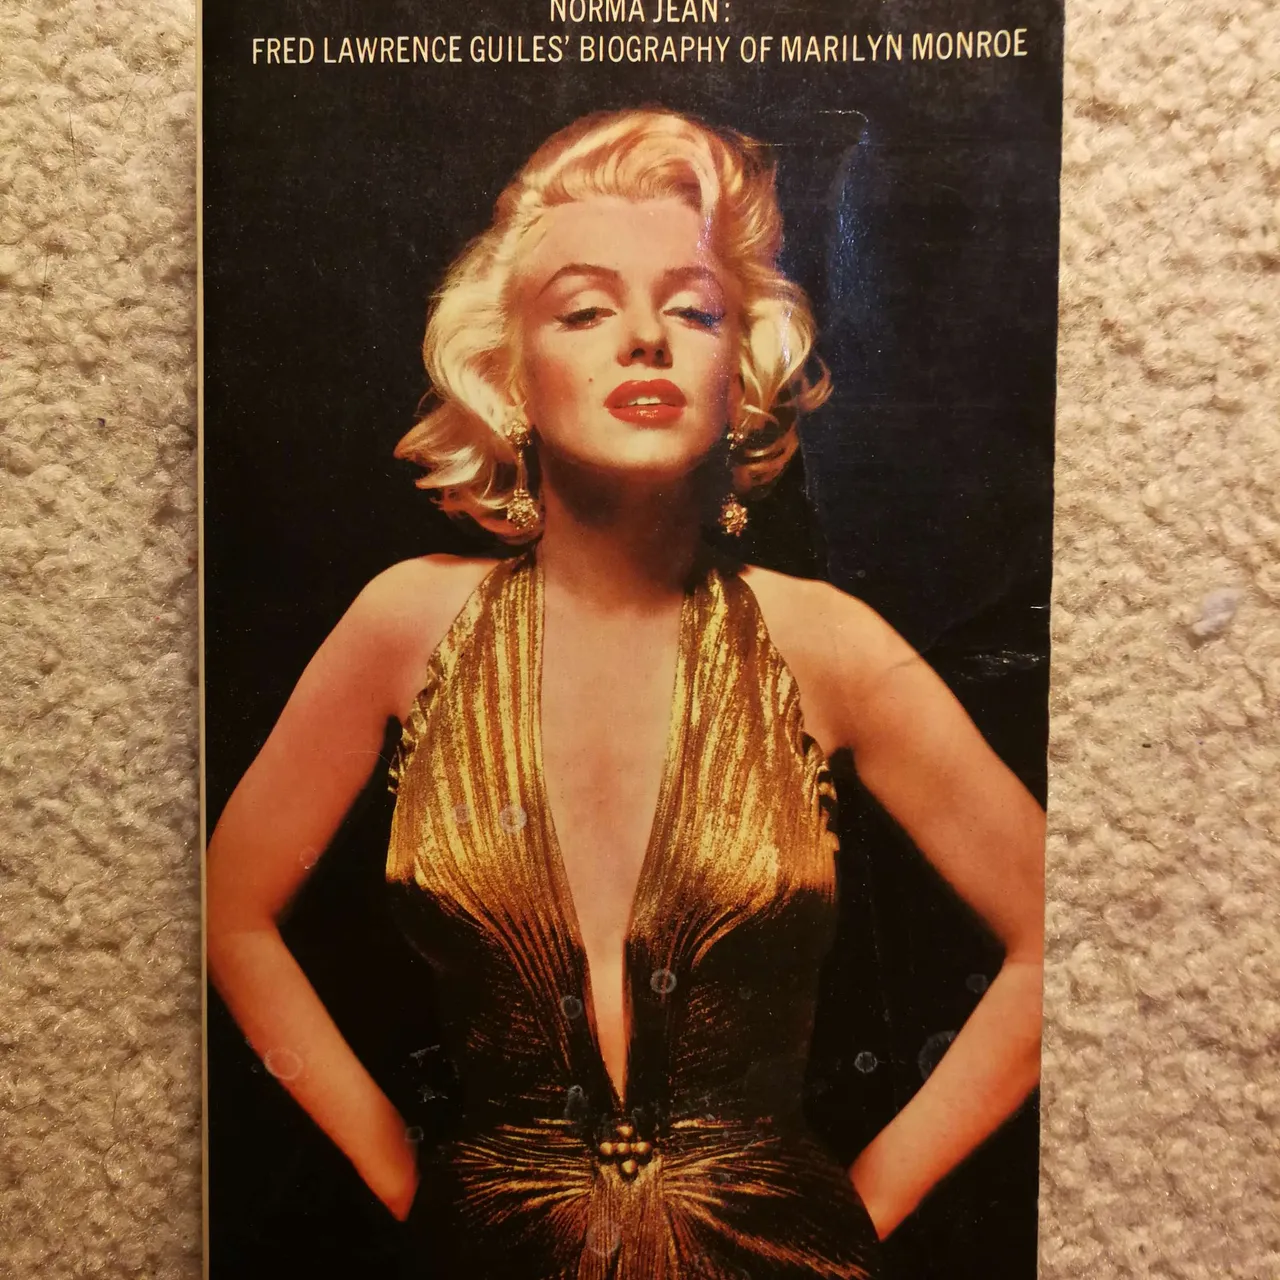 *FREE Biography of Marilyn Monroe
free photo 1